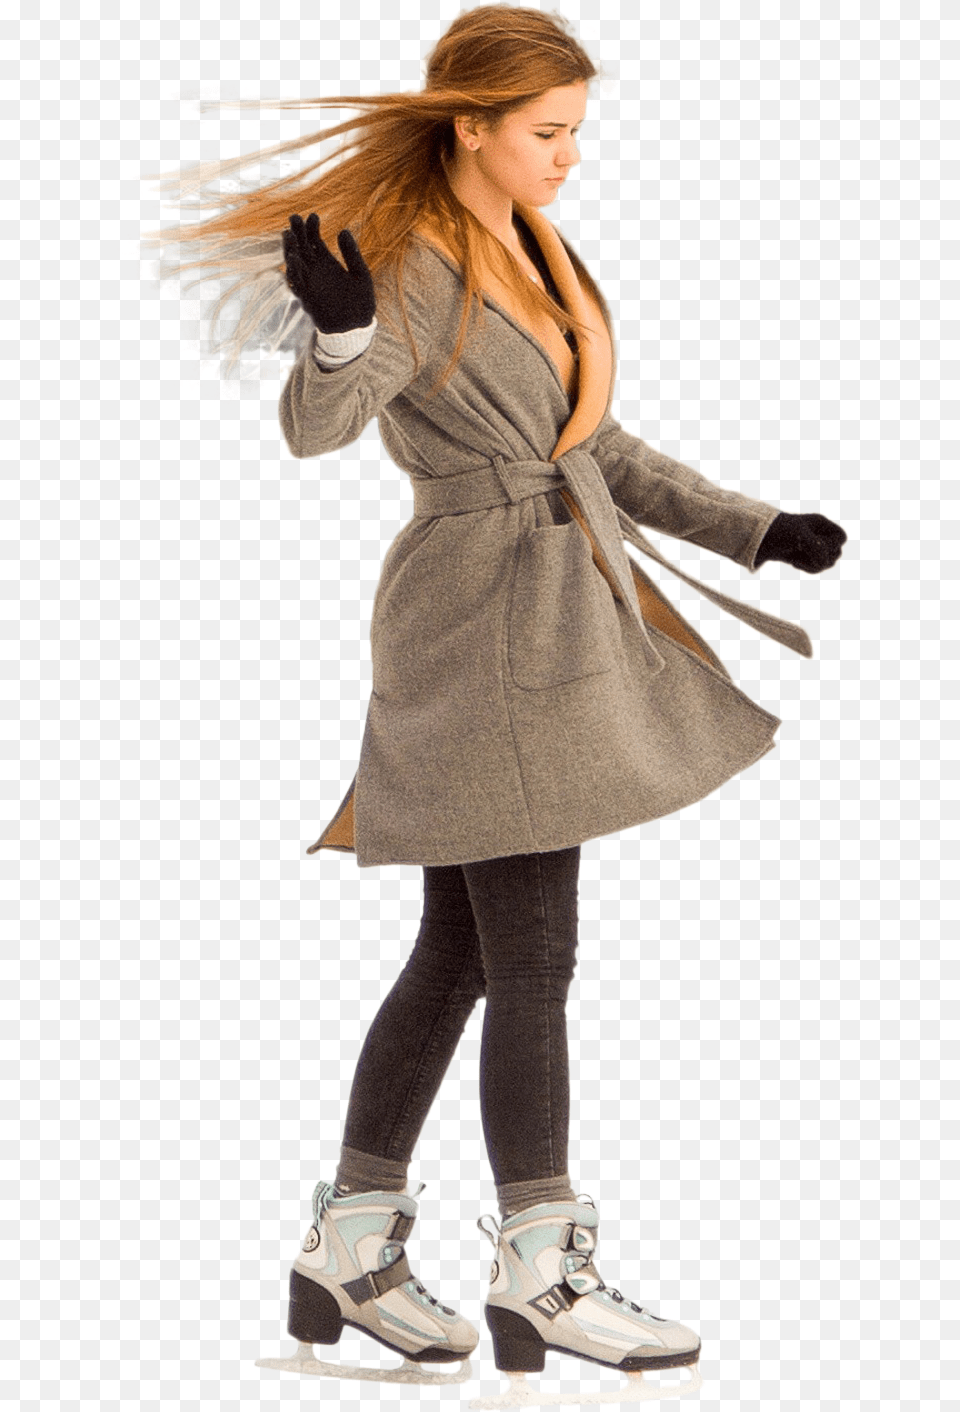 Transparent Kid Standing Ice Skating Girl, Clothing, Coat, Shoe, Footwear Png Image